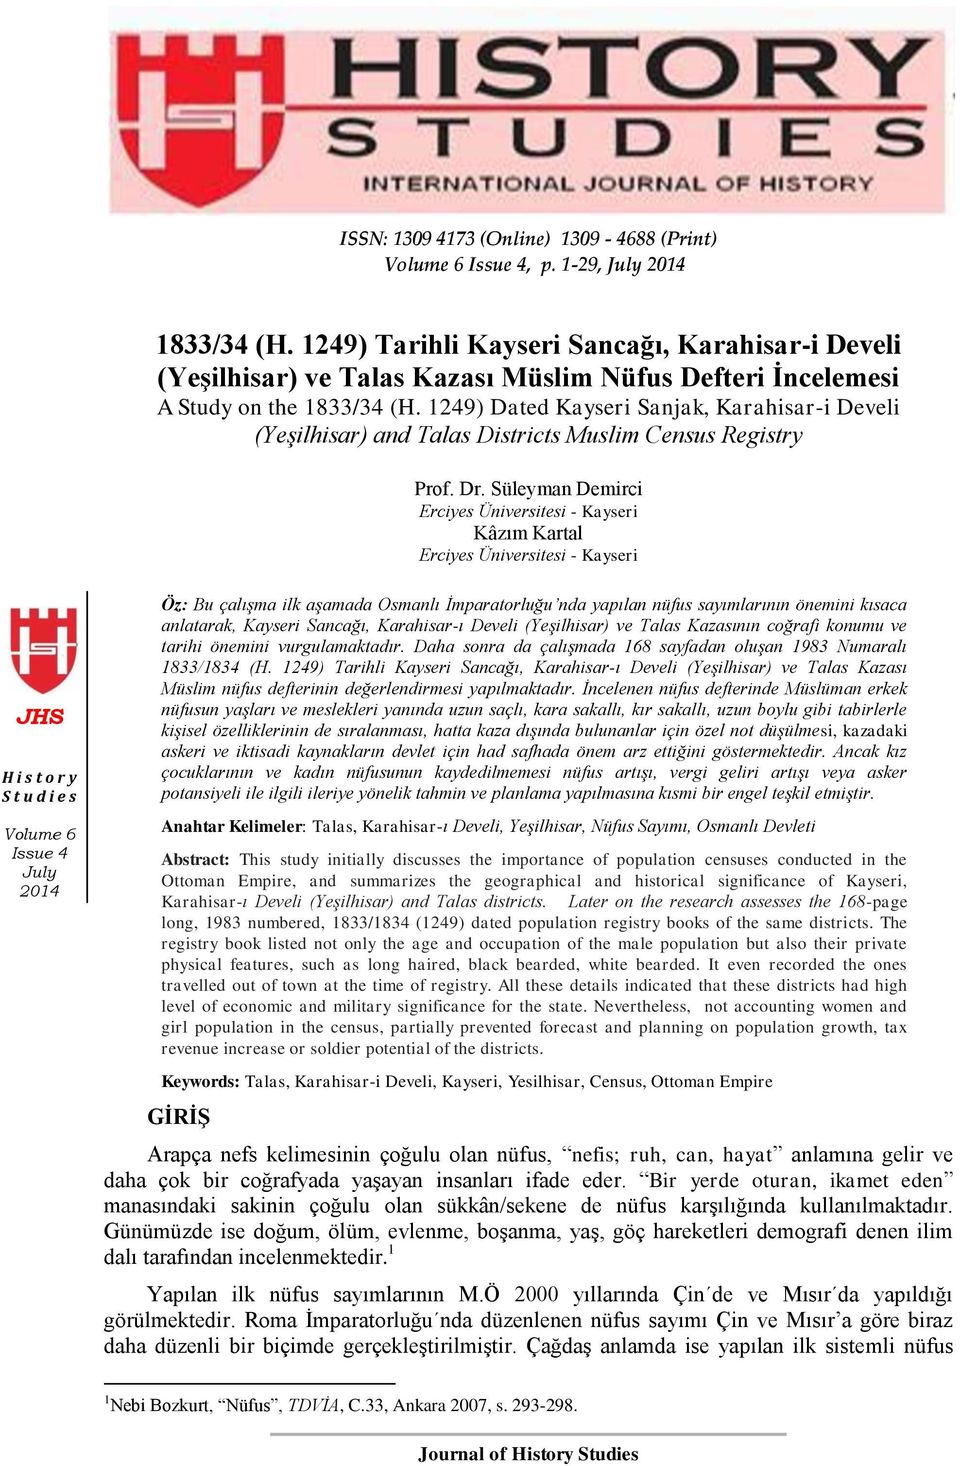 1249) Dated Kayseri Sanjak, Karahisar-i Develi (Yeşilhisar) and Talas Districts Muslim Census Registry Prof. Dr.